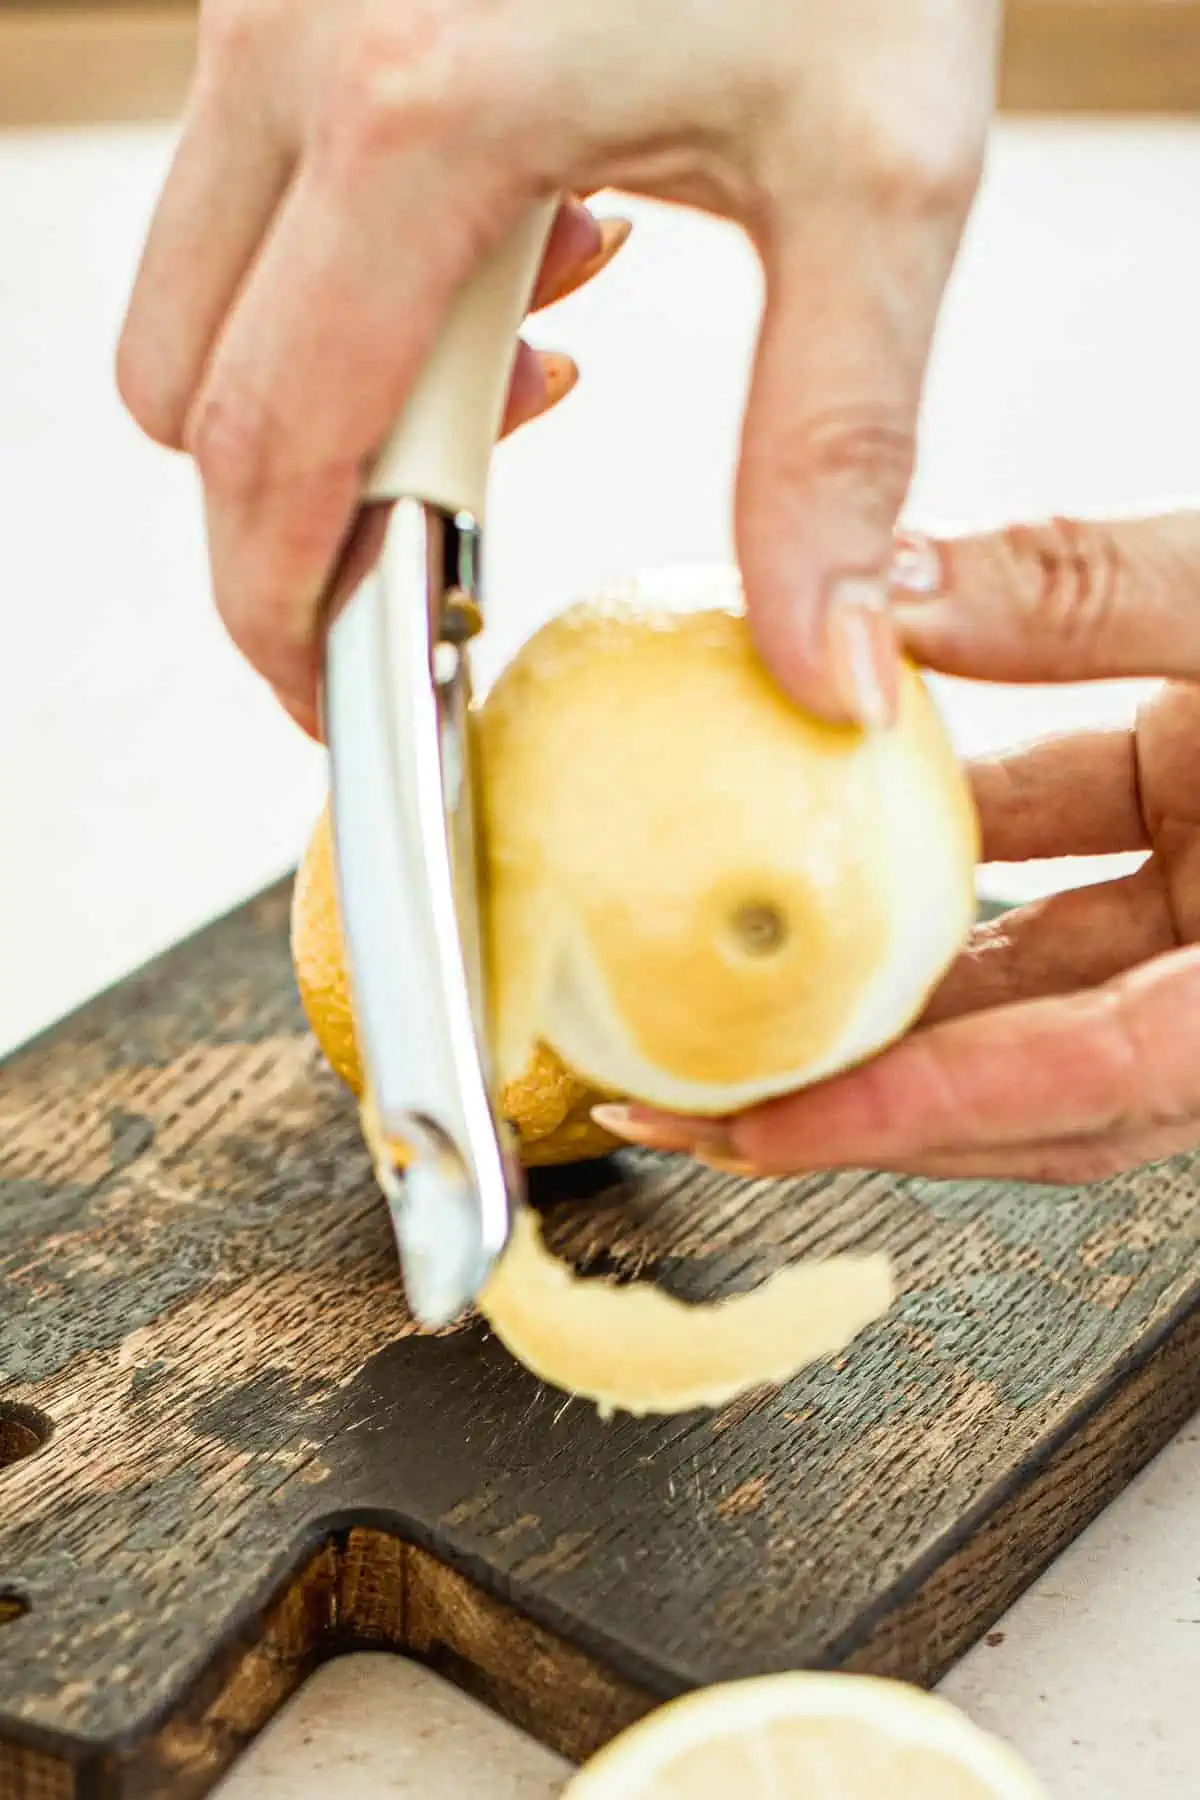 Zesting a lemon with a vegetable peeler.